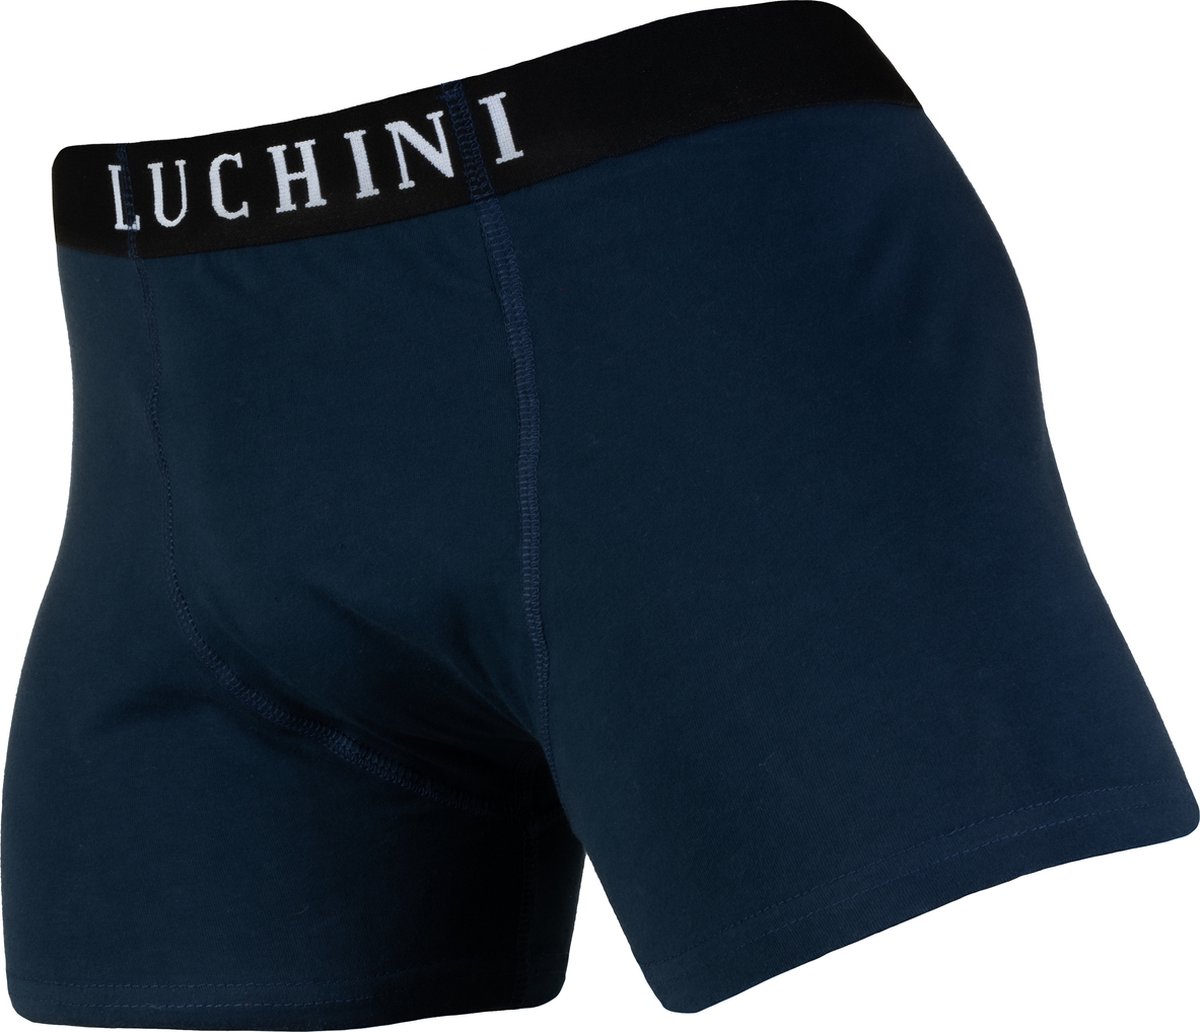 Luchini Clothing ® - LC Classic Maat XL - Premium Boxershorts heren - Heren Privacy Boxers met verborgen vak - 2-PACK boxershorts - Stealth boxers - Blauw